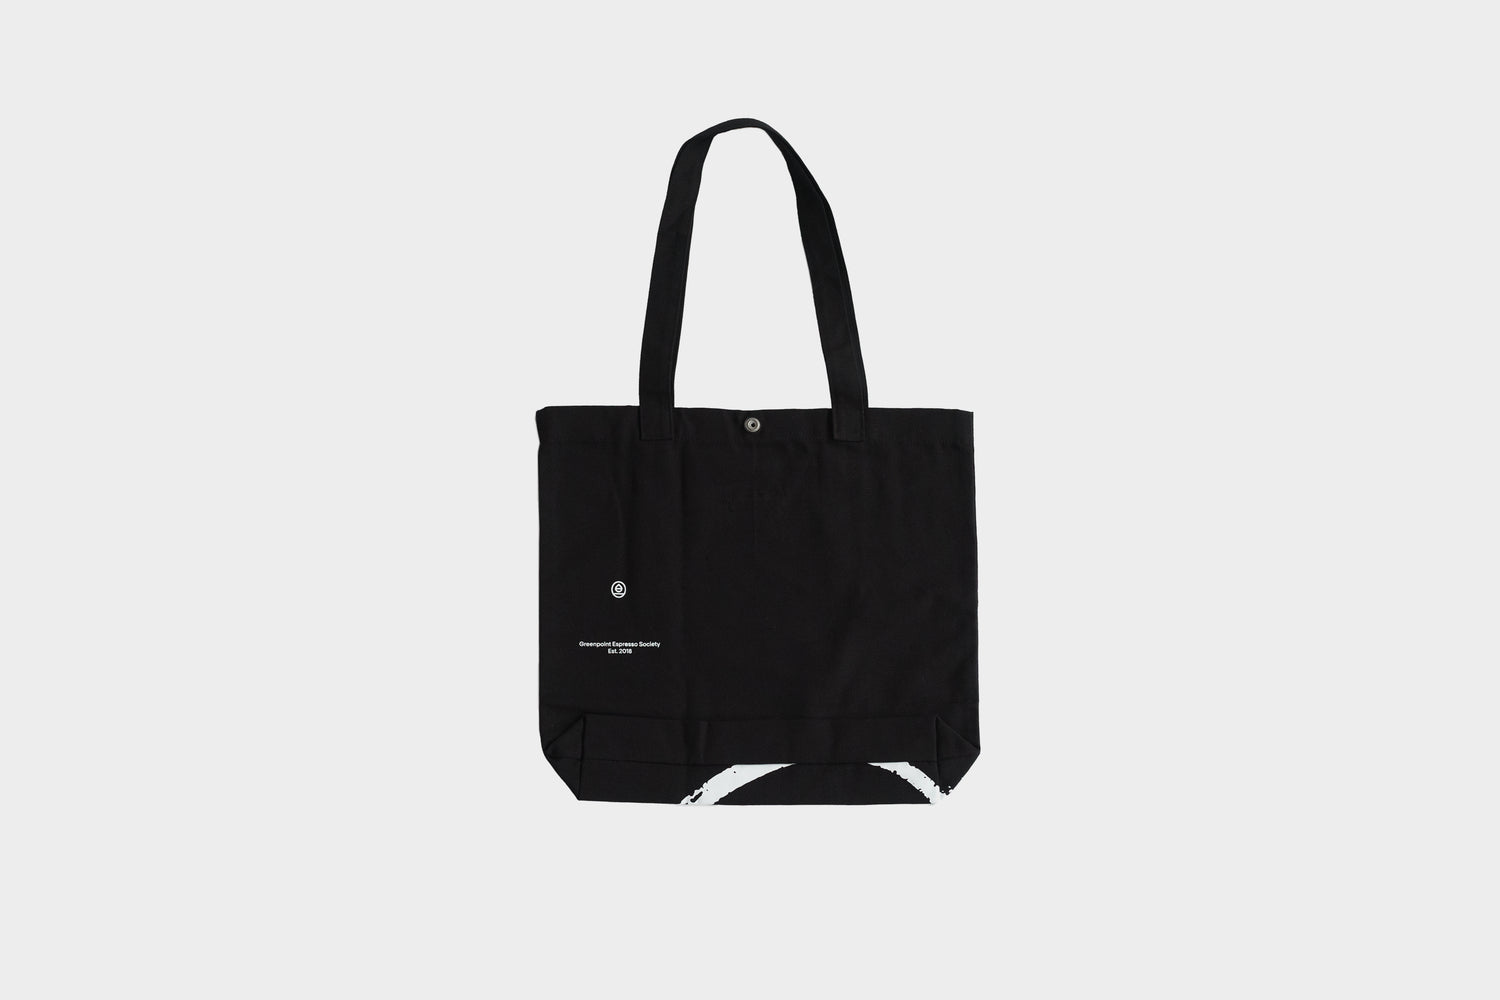 Terra Kaffe | Black tote bag with "Terra Kaffe, Est. 2019" written in white